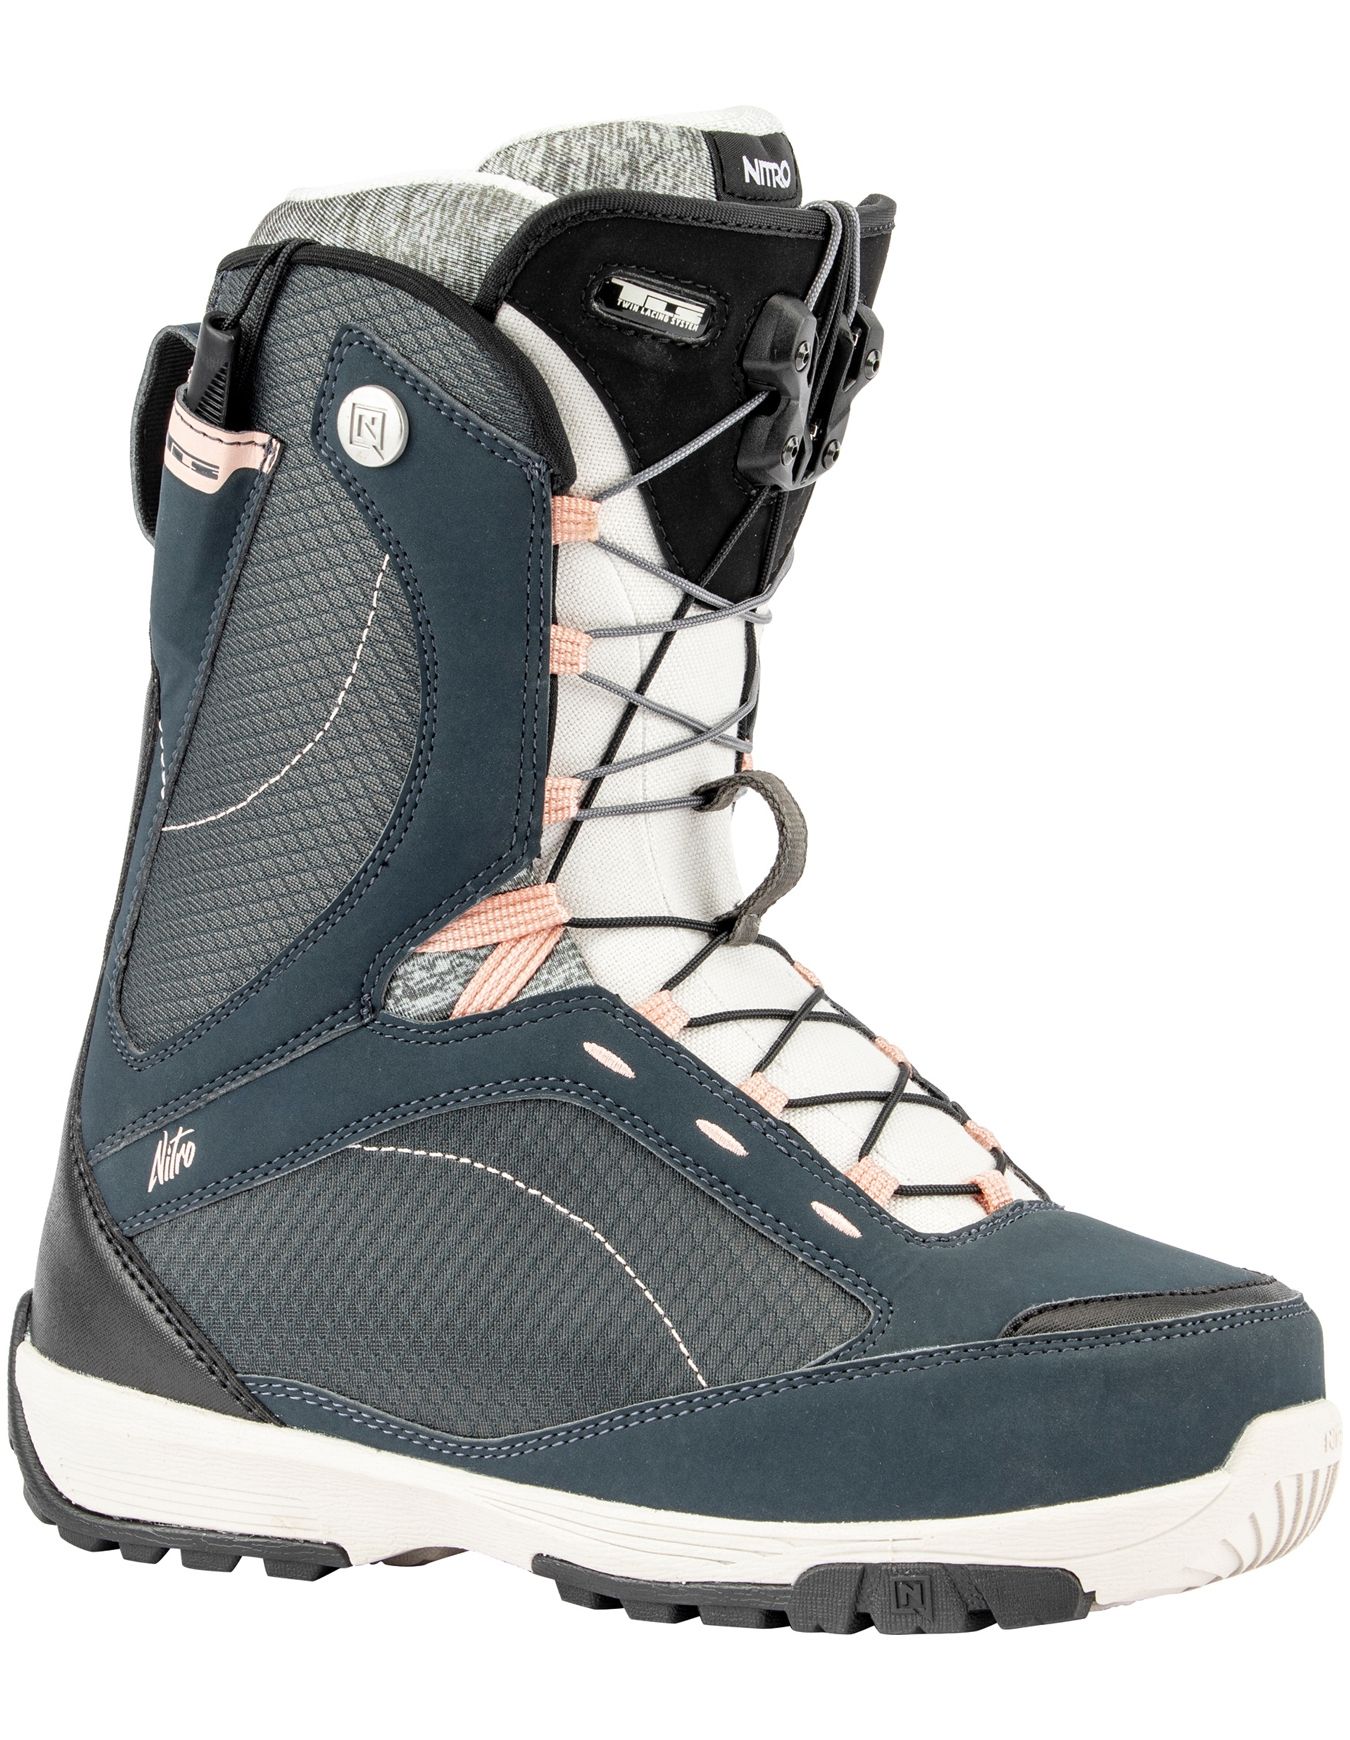 Boots de snowboard Monarch Nitro